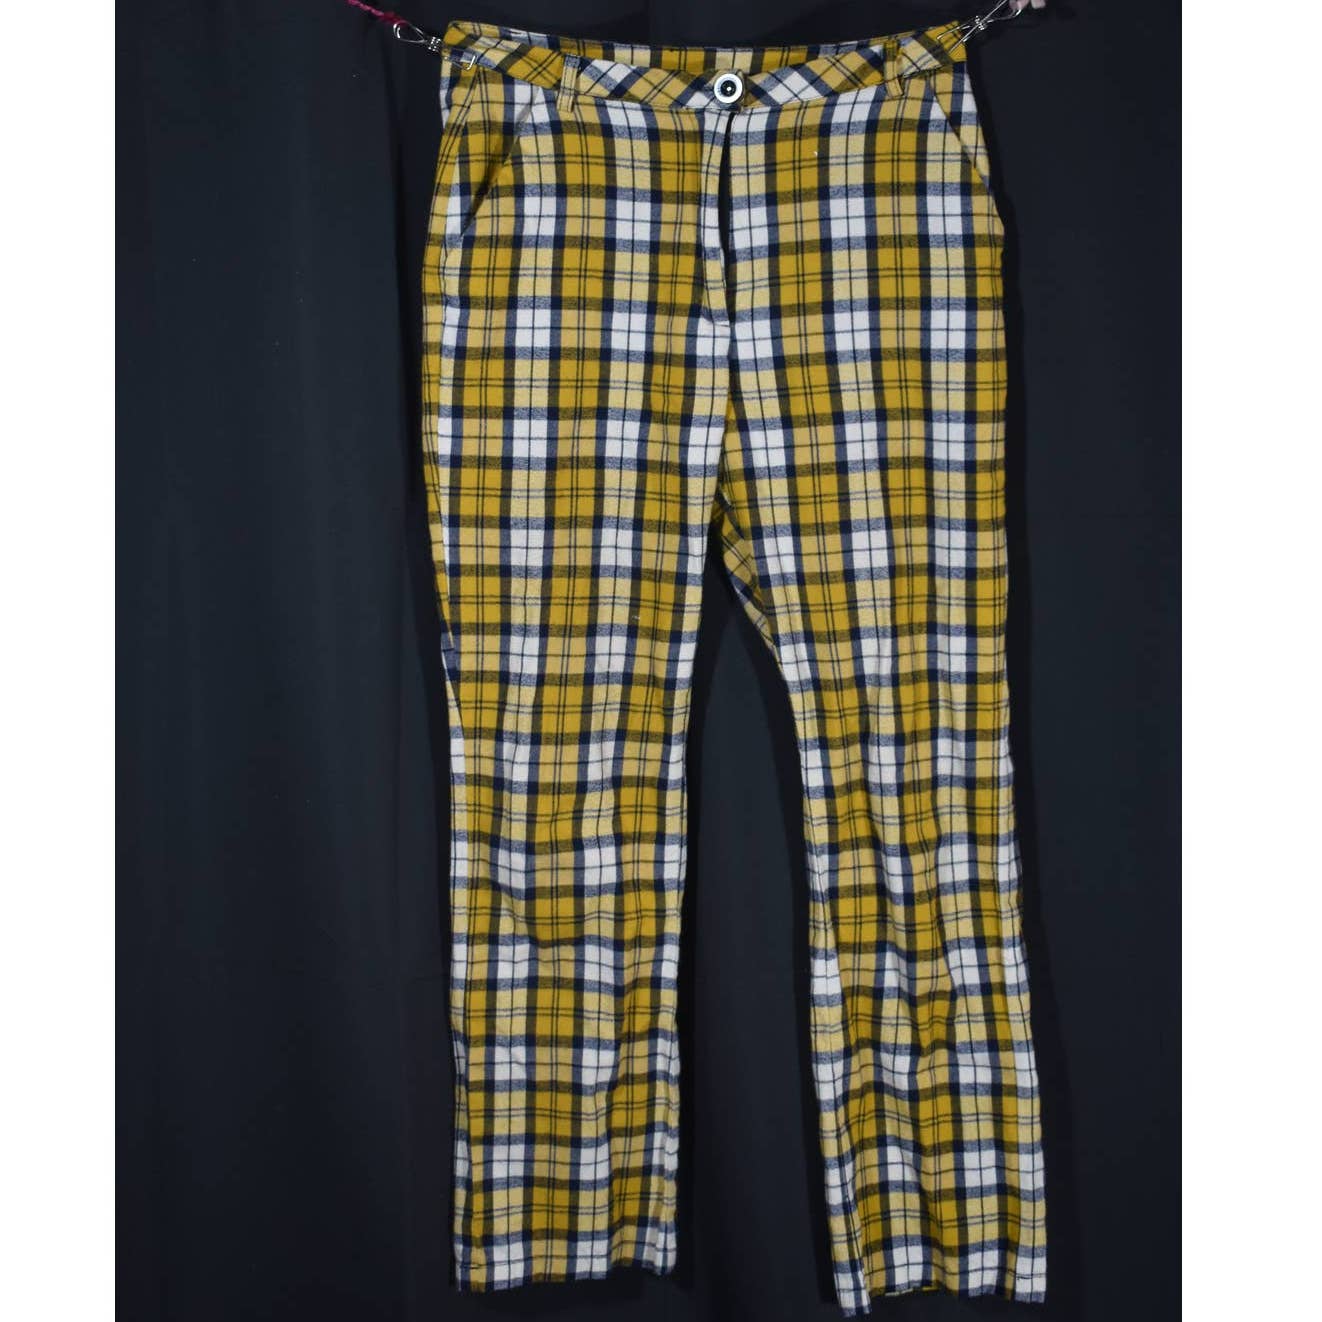 UNIF Yellow, White, and Black Plaid Pants- 26